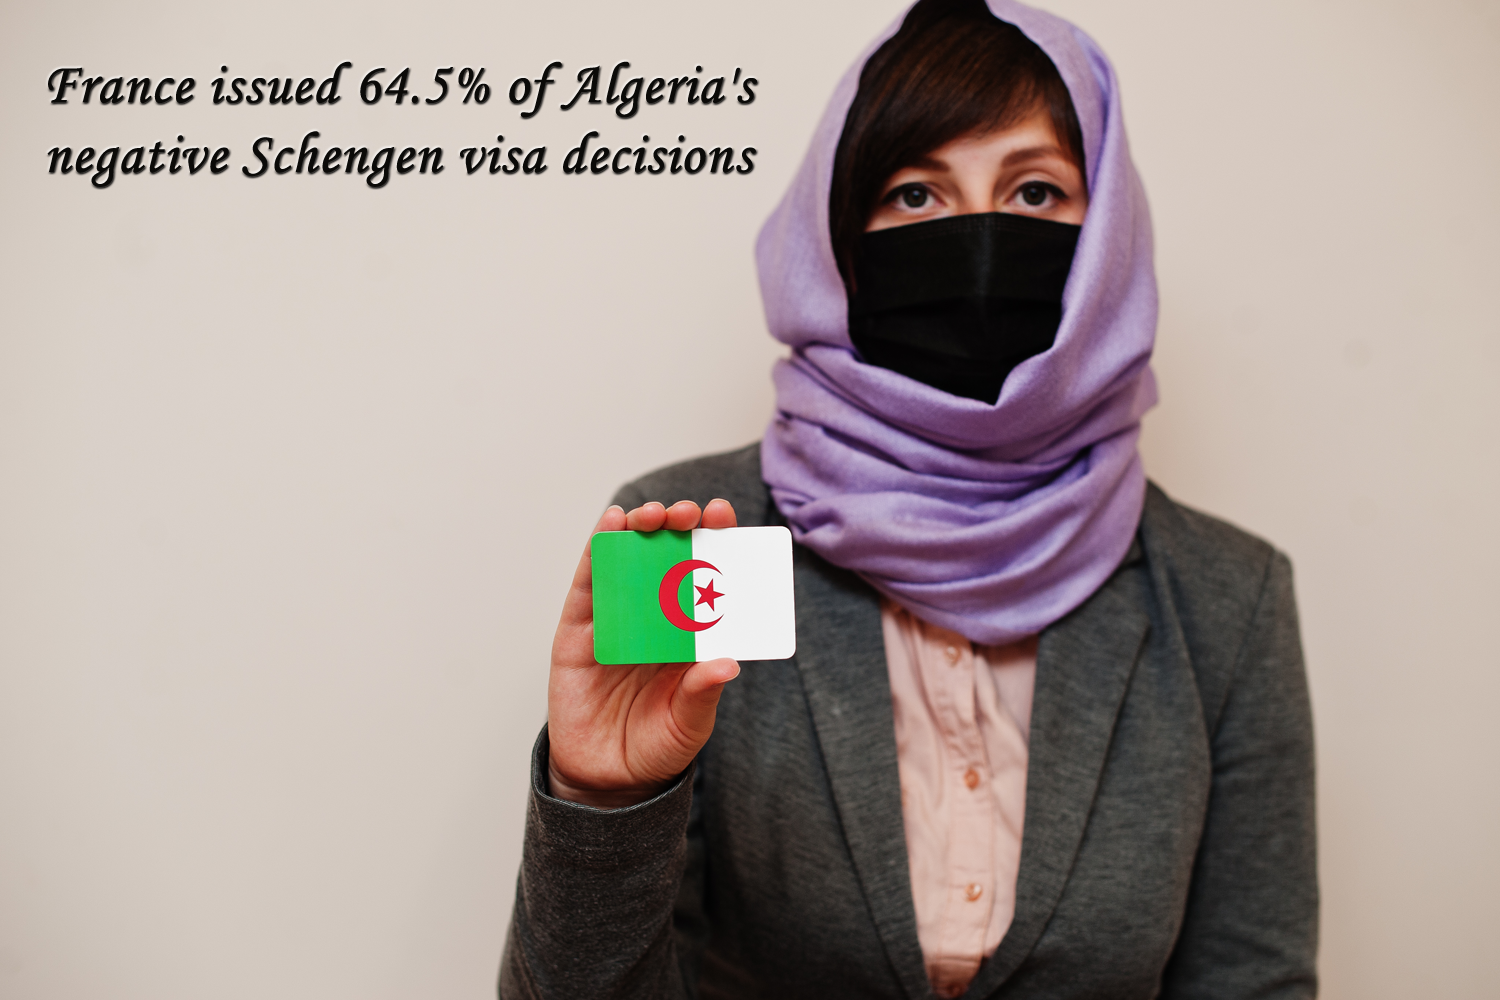 France issued 64.5% of Algeria's negative Schengen visa decisions.